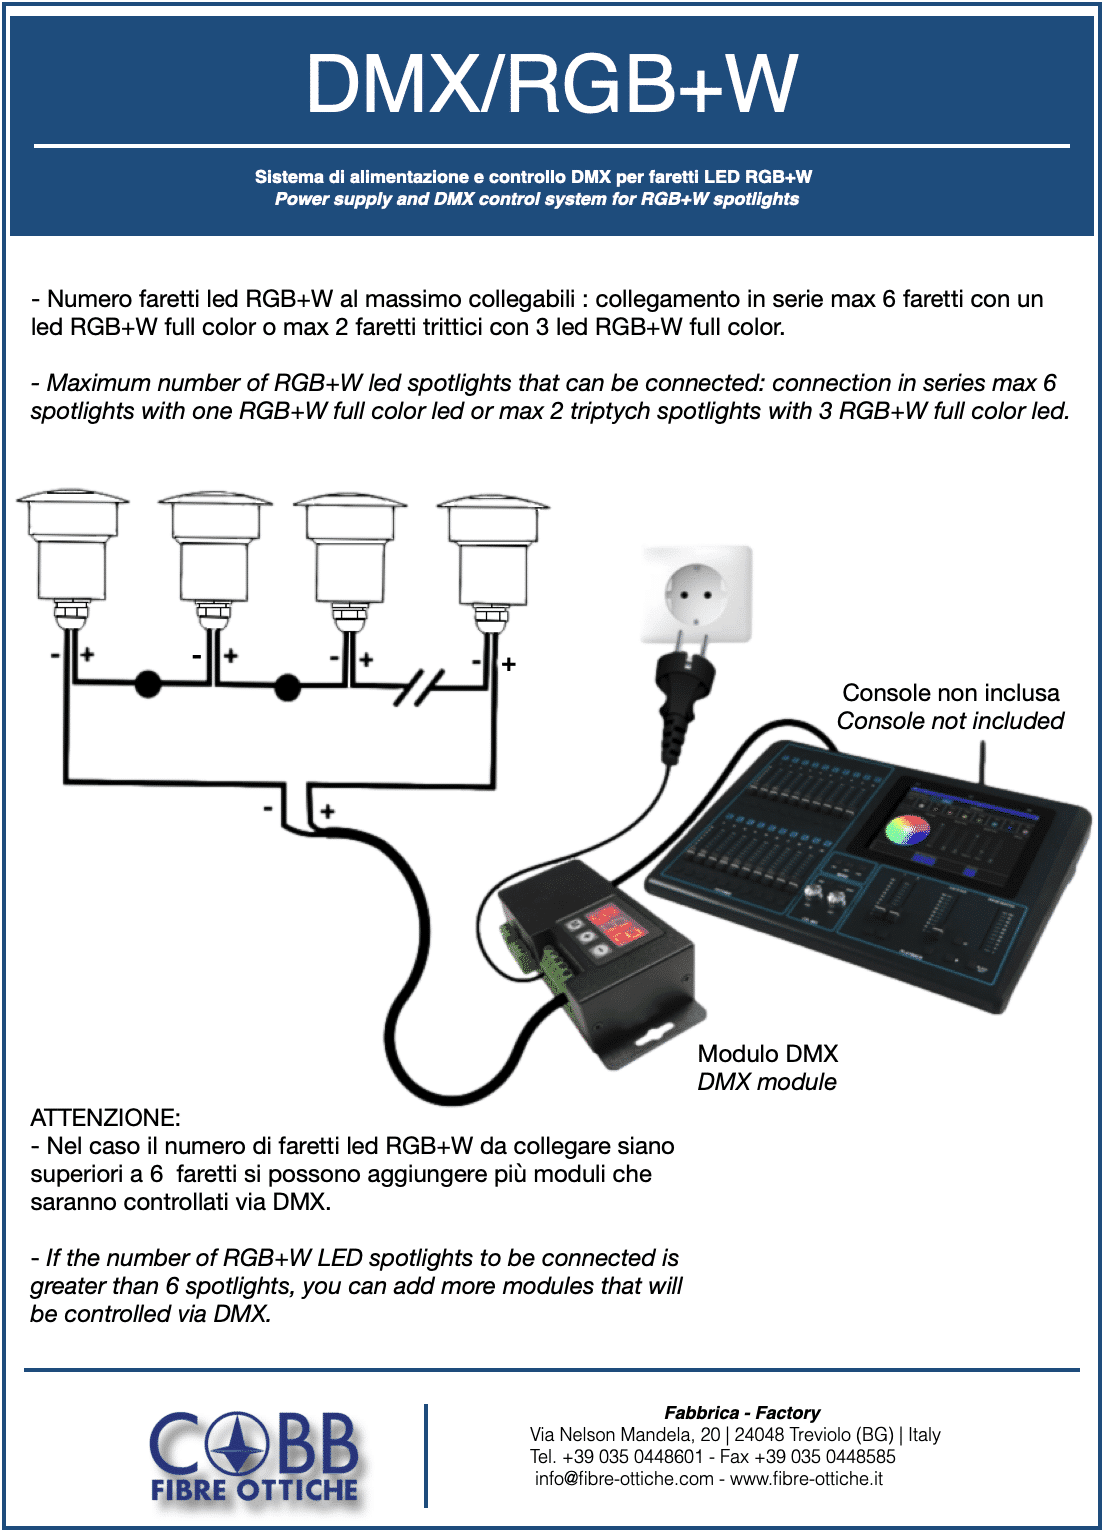 Cobb Fibre Ottiche | DMX/RGB+W DMX CONTROL SYSTEM FOR RGB+W SPOTLIGHTS